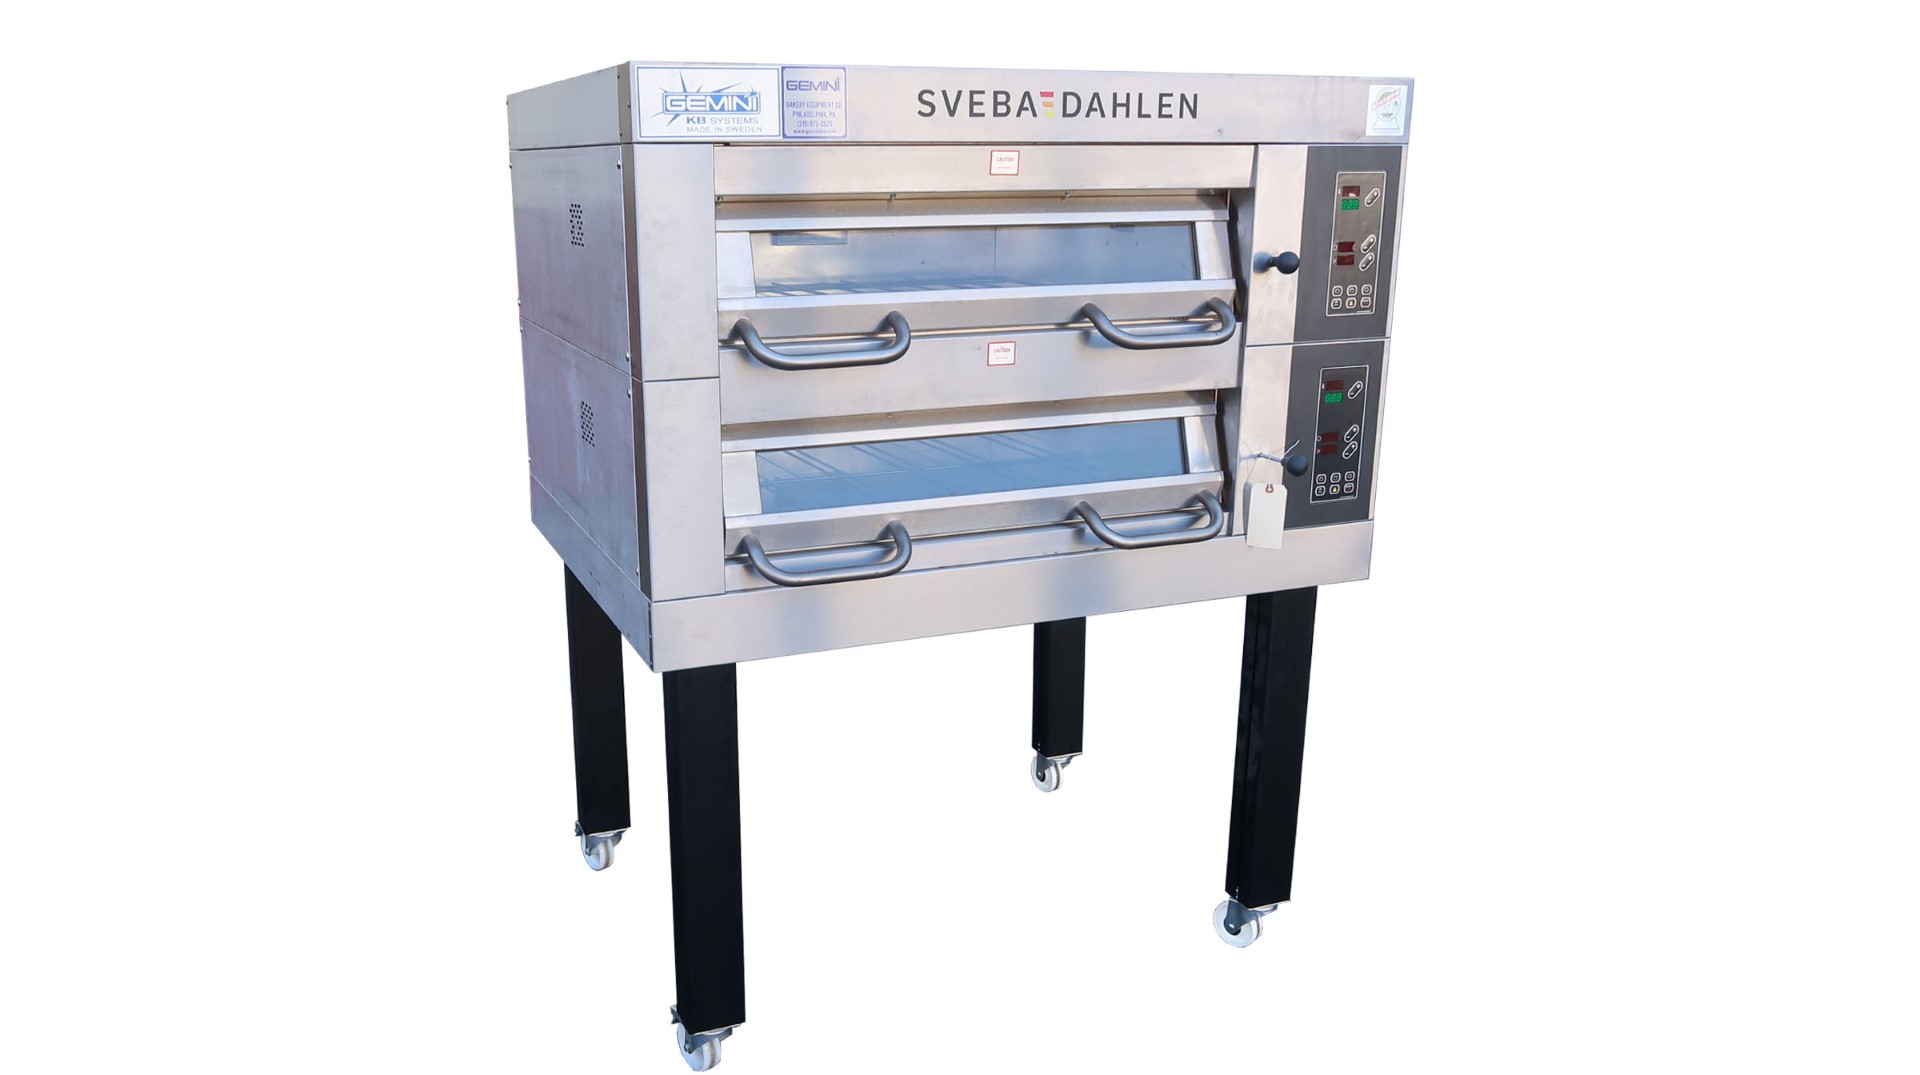 Sveba Dahlen Model D22N Electric Deck ovens